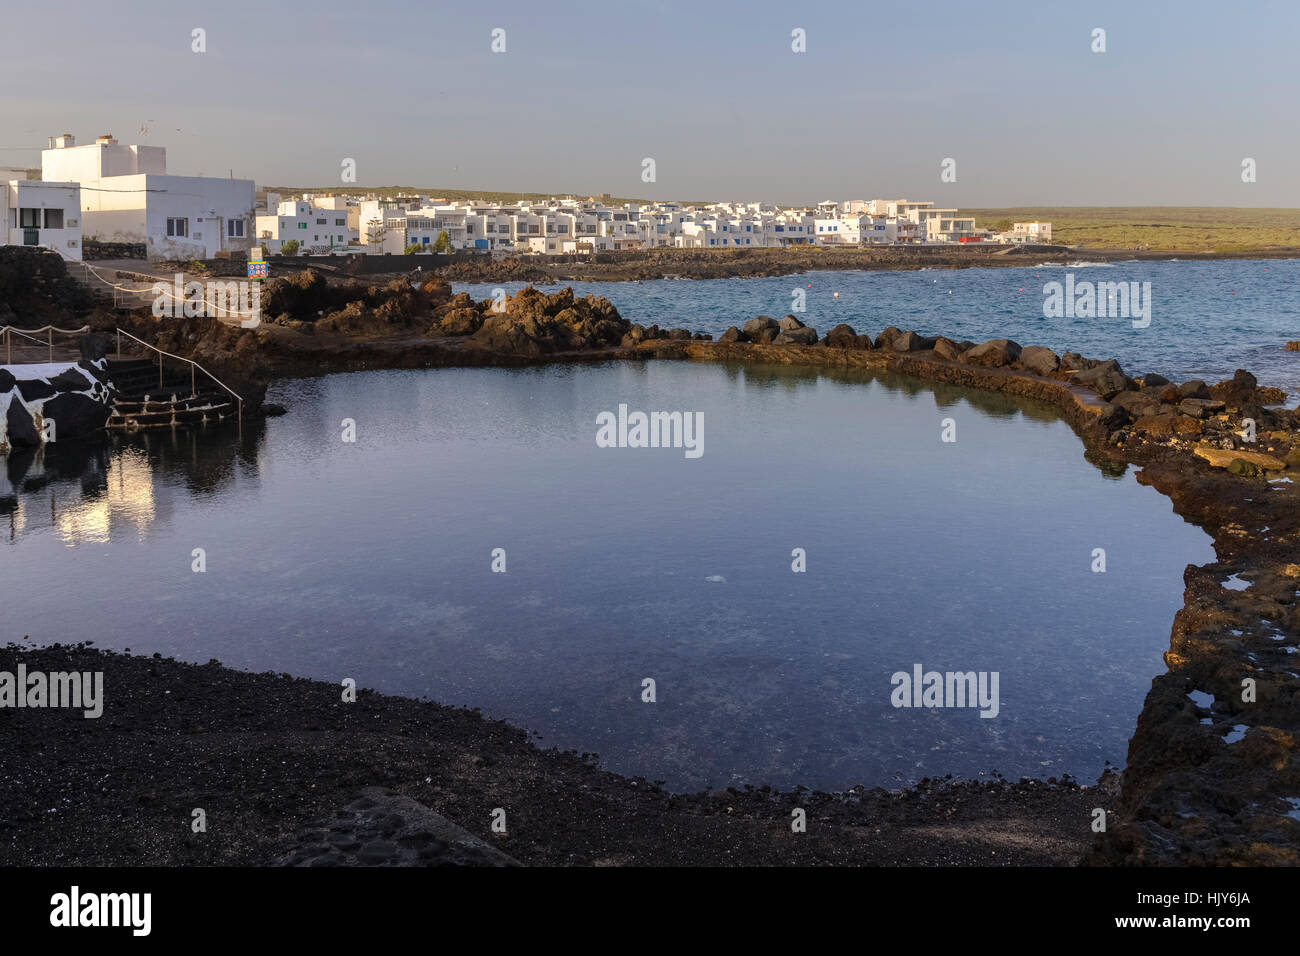 Piscines d'eau de mer, Punta Mujeres, Haria, Lanzarote, îles Canaries, Espagne Banque D'Images